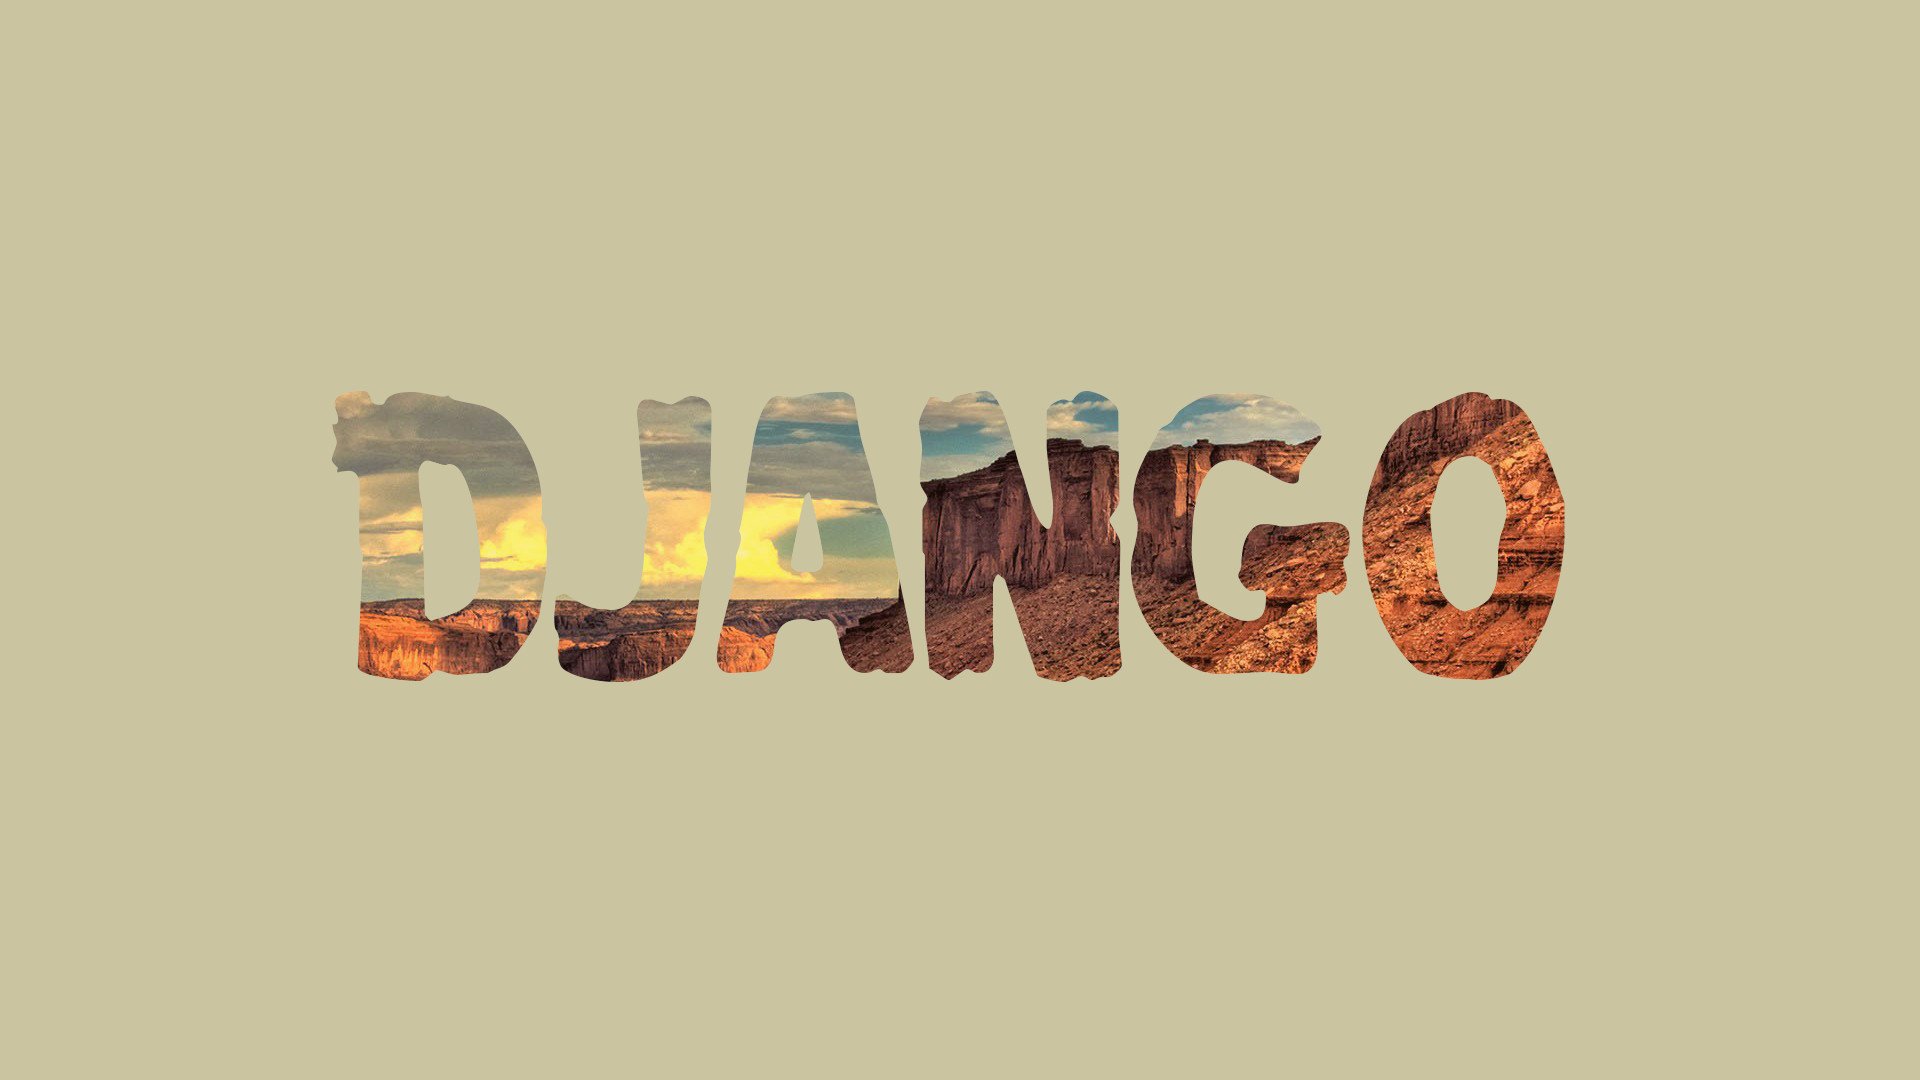 Обои 1 час. Wallpapers for Django developers.